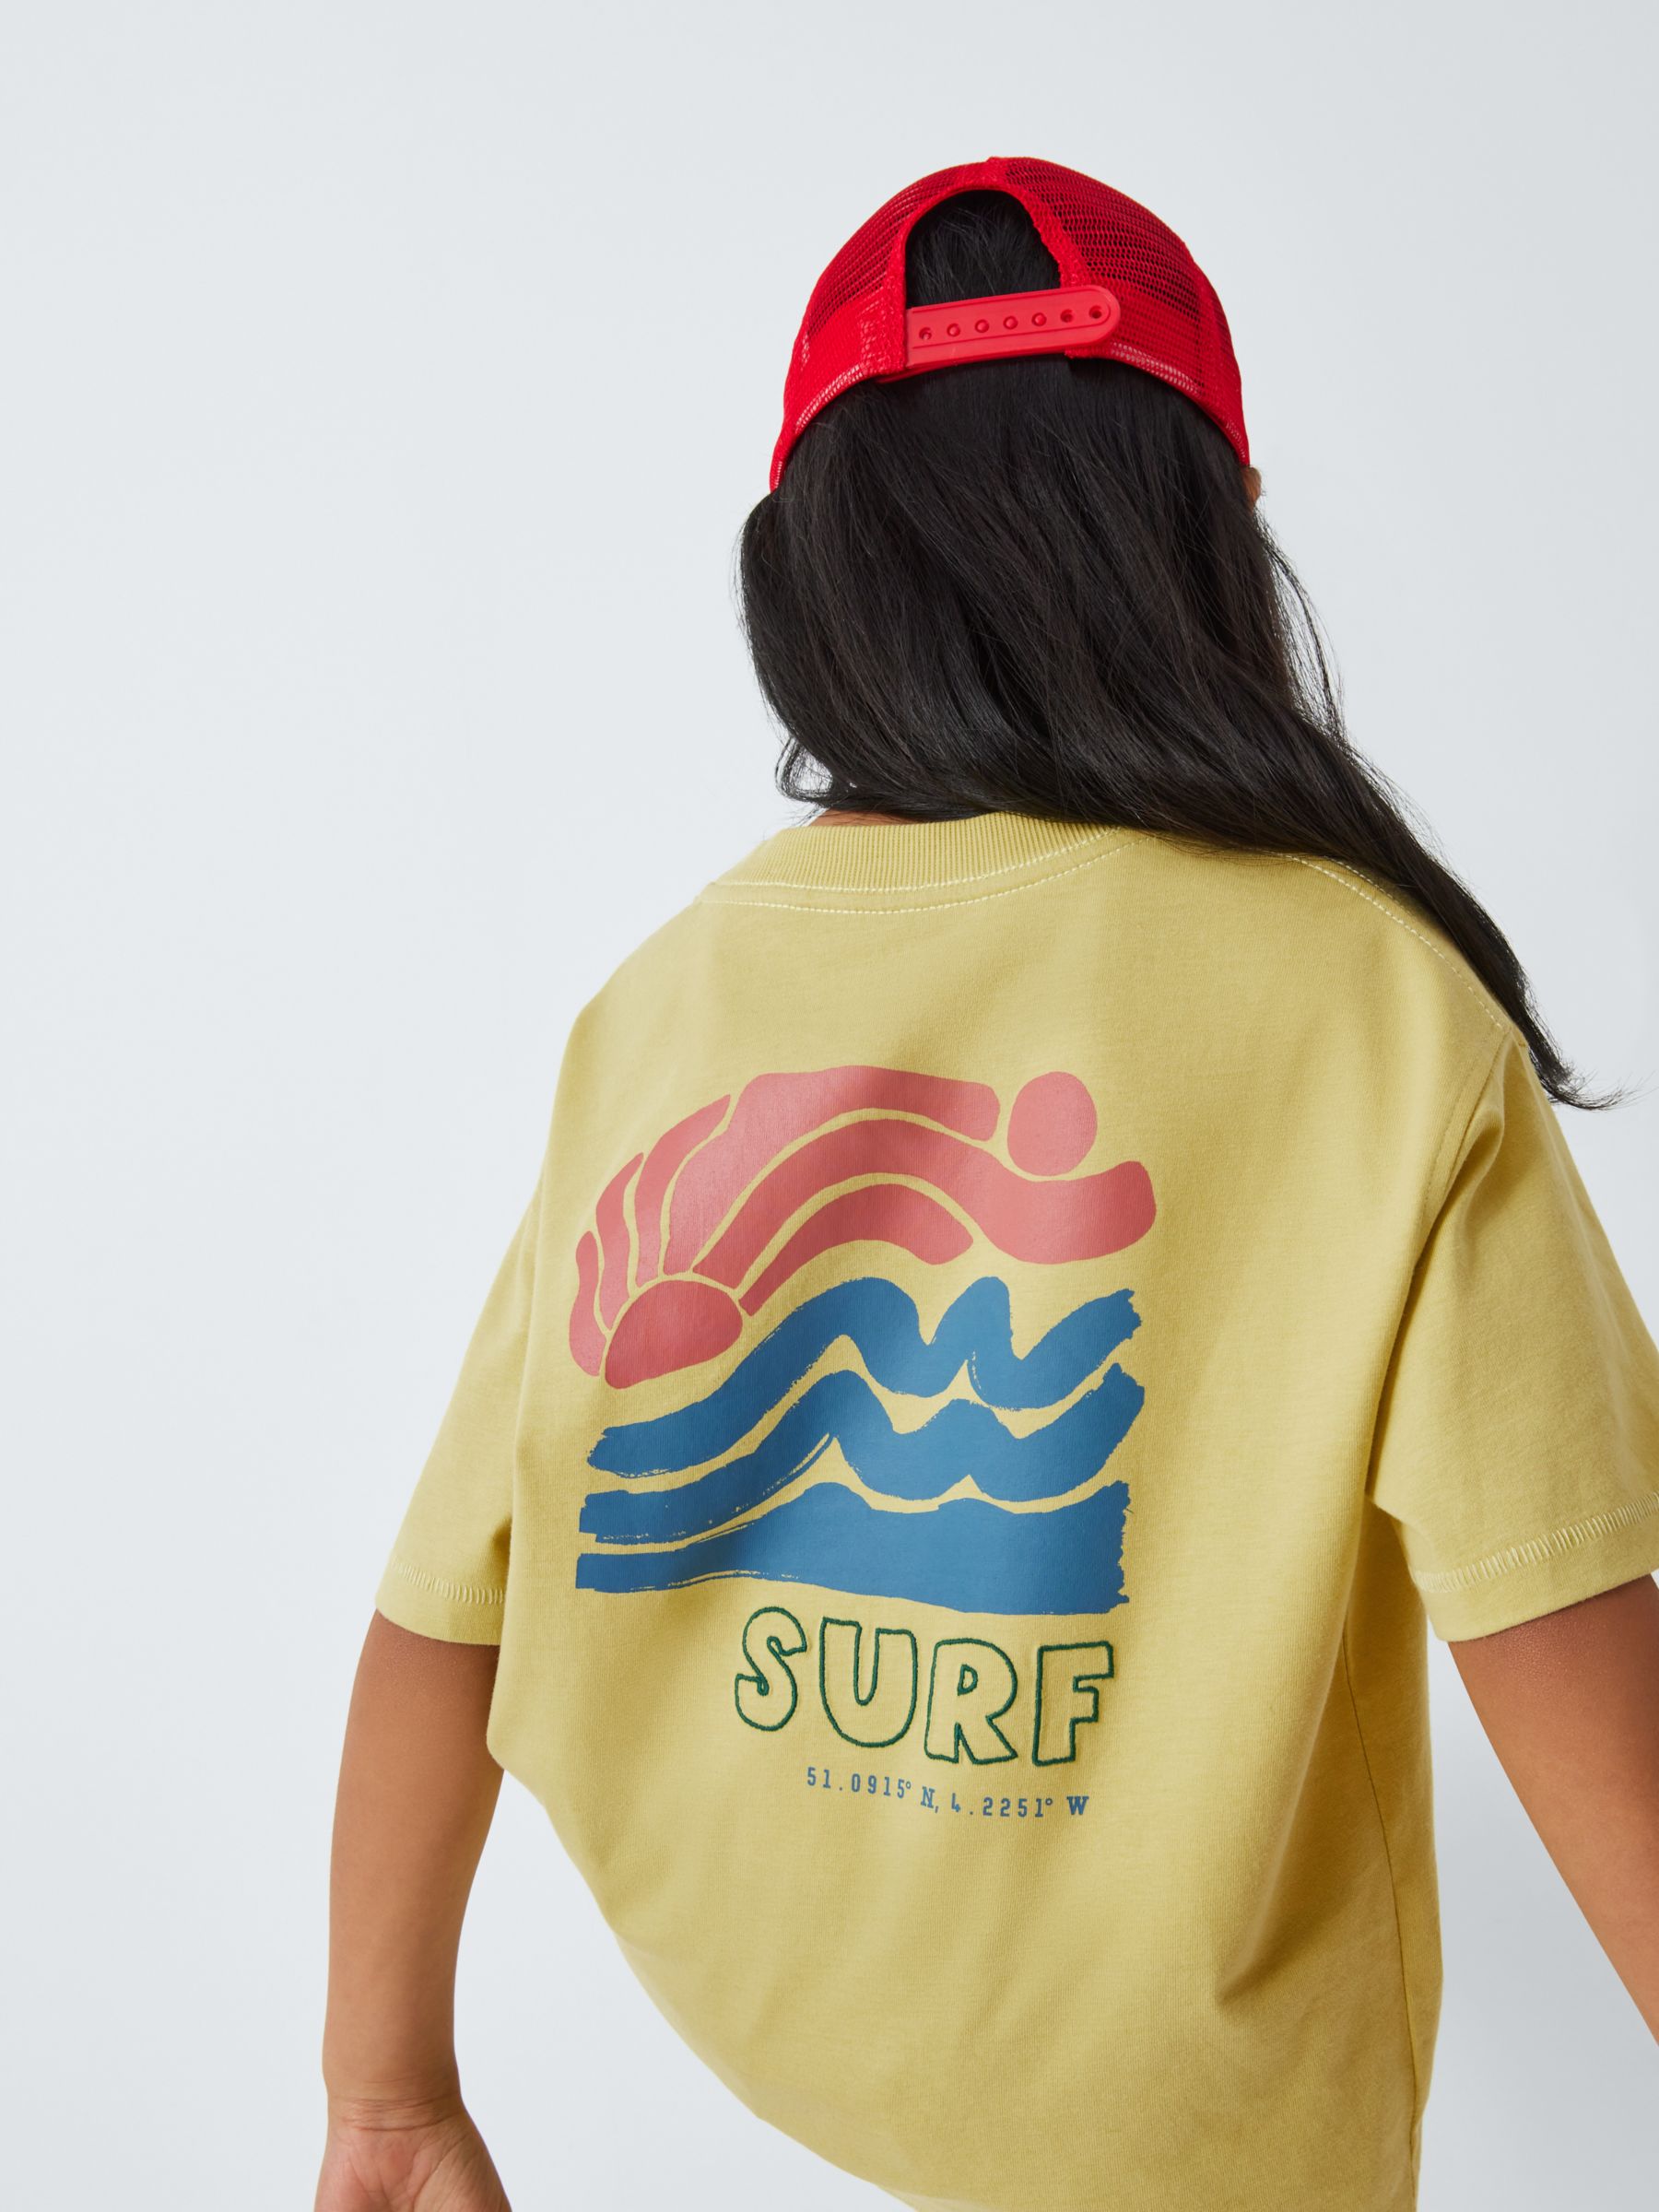 John Lewis Kids' Surf Graphic T-Shirt, Yellow, 10 years